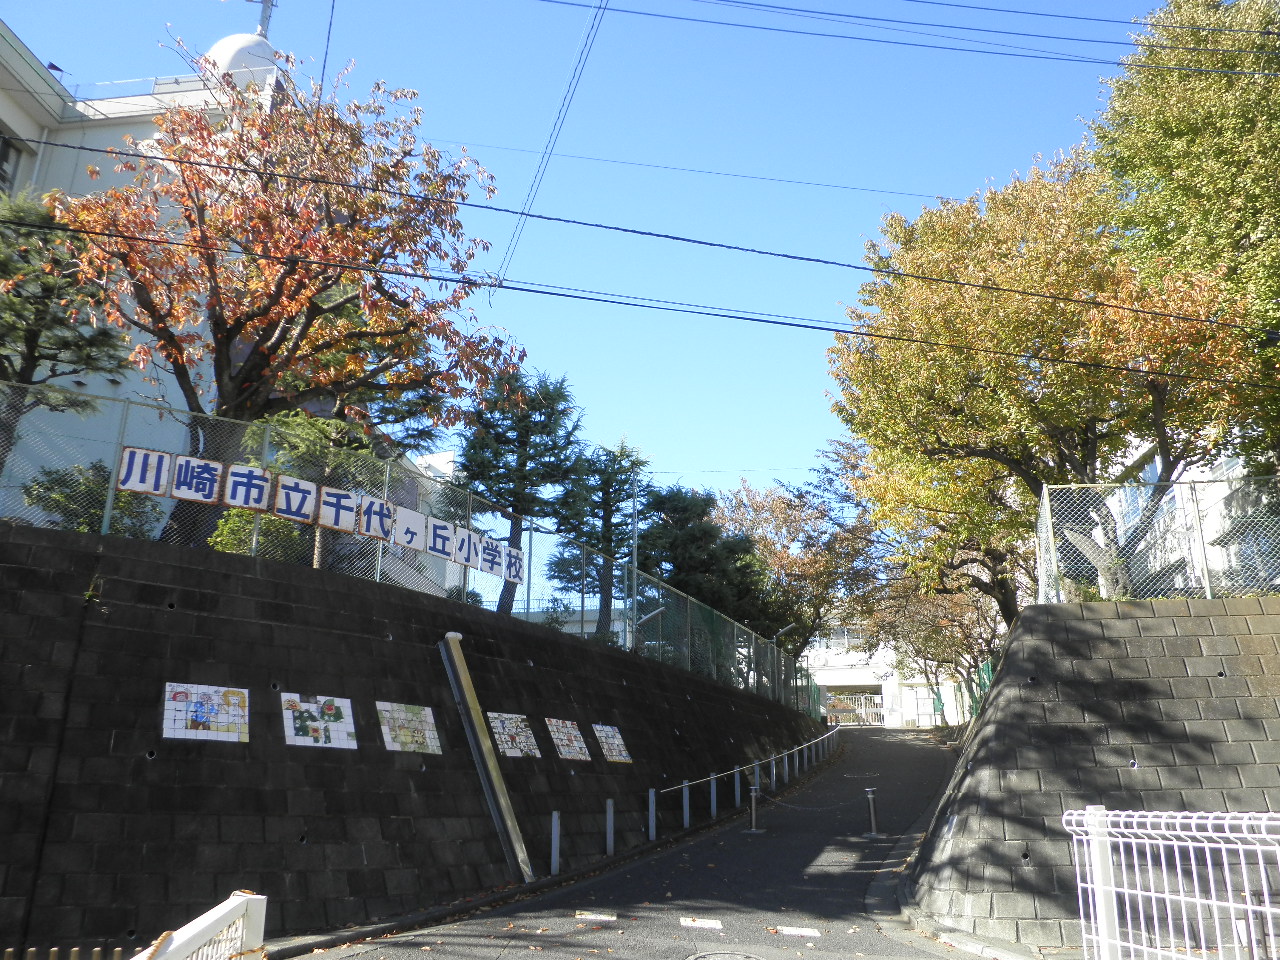 Primary school. 1100m to the Kawasaki Municipal Chiyogaoka elementary school (elementary school)